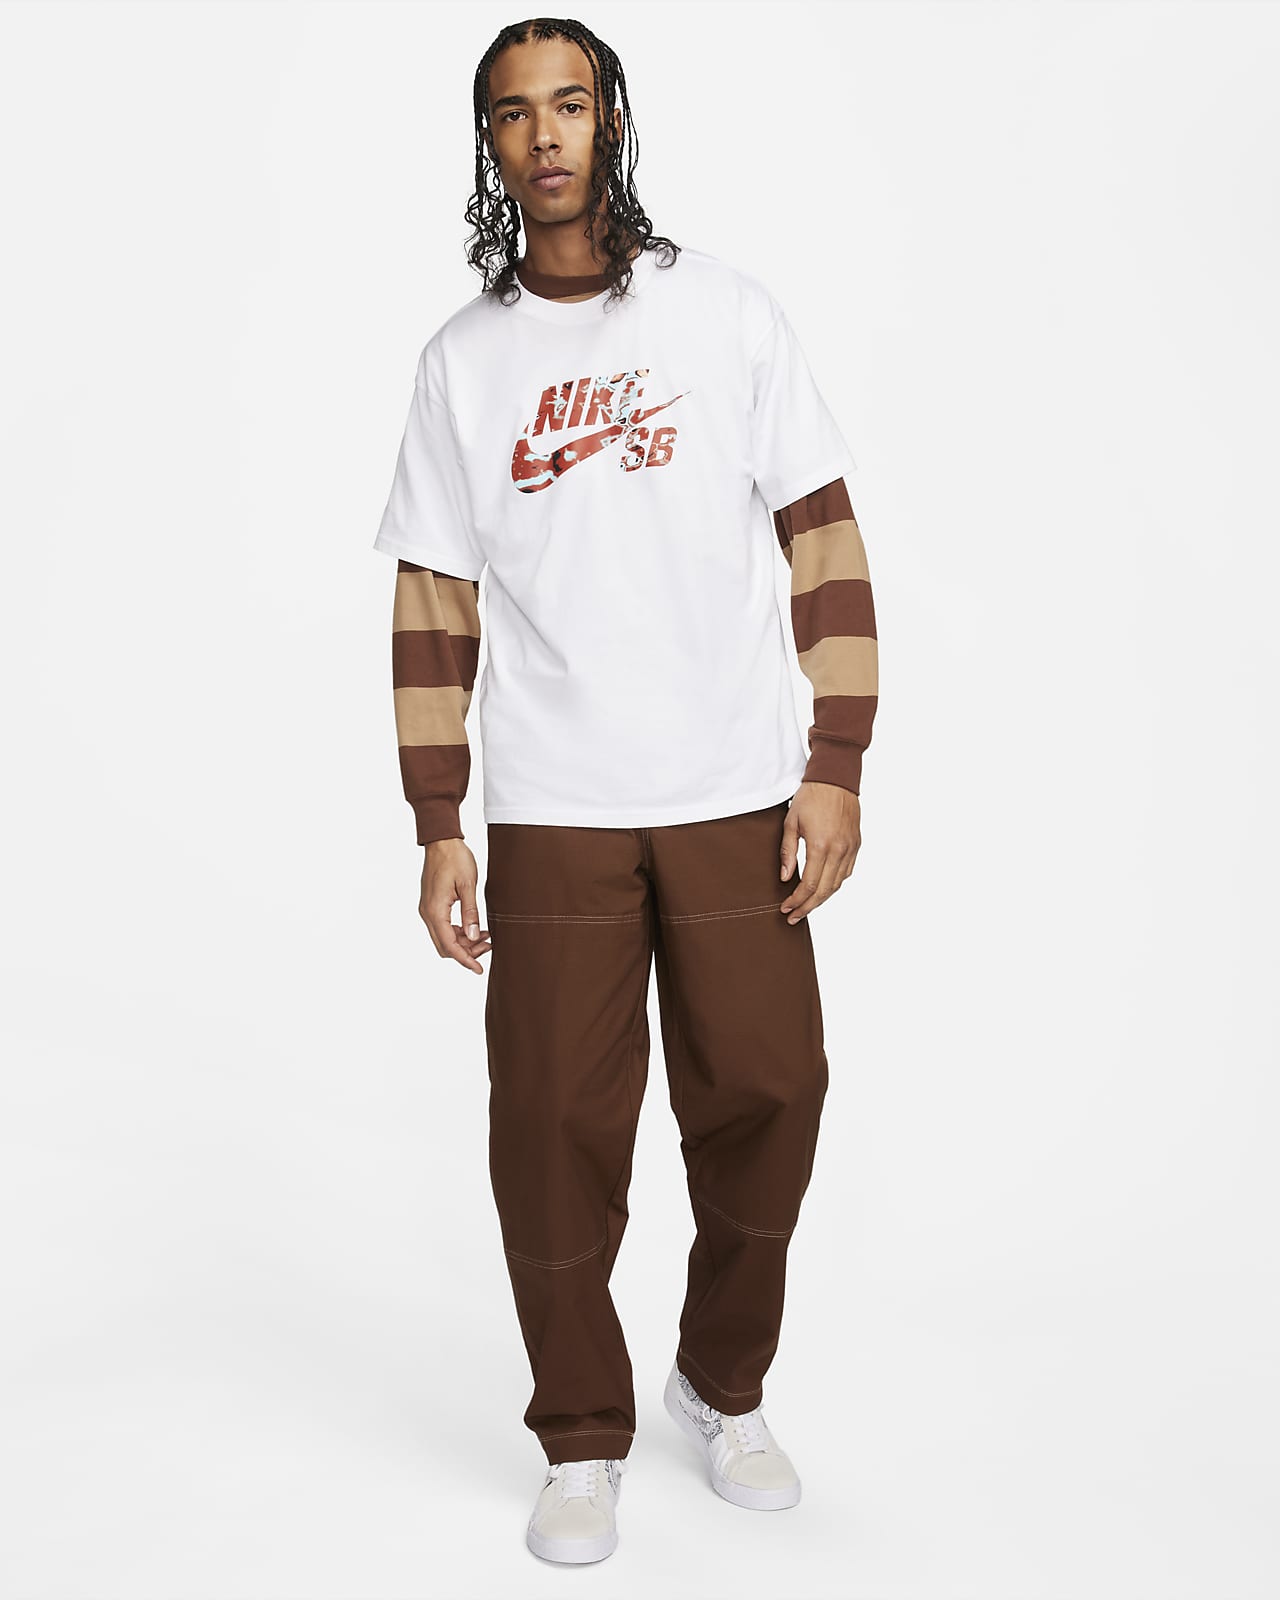 Nike Sb Chino Skate Pants brązowy, Clothes \ Pants Brands \ Nike SB News  SALE \ Sale - 40% \ Pants